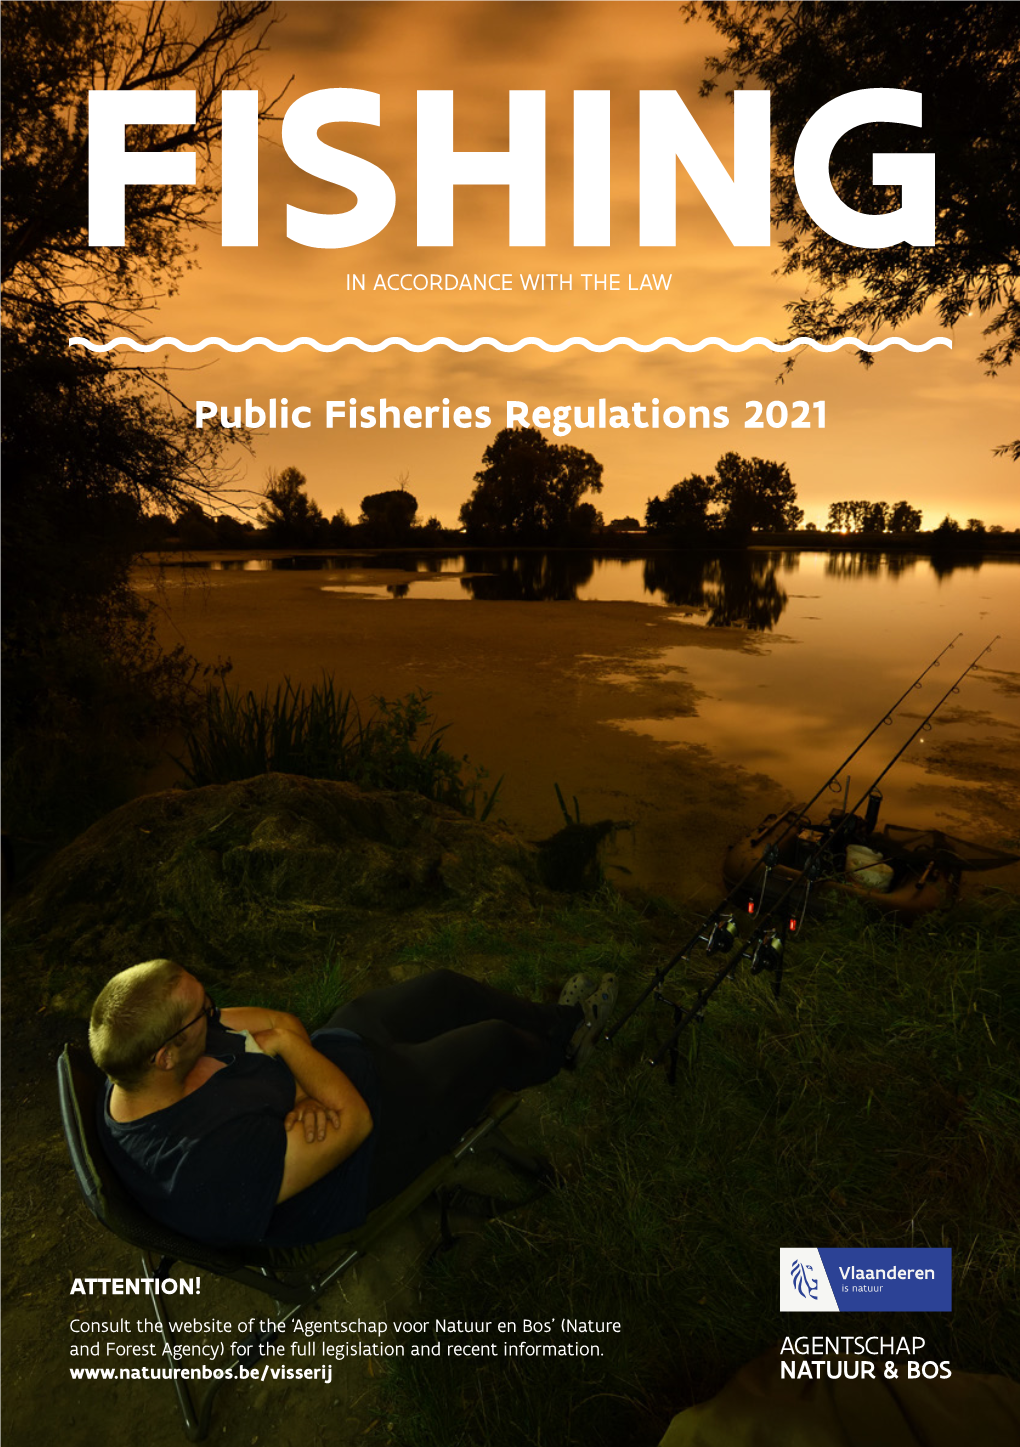 Public Fisheries Regulations 2021